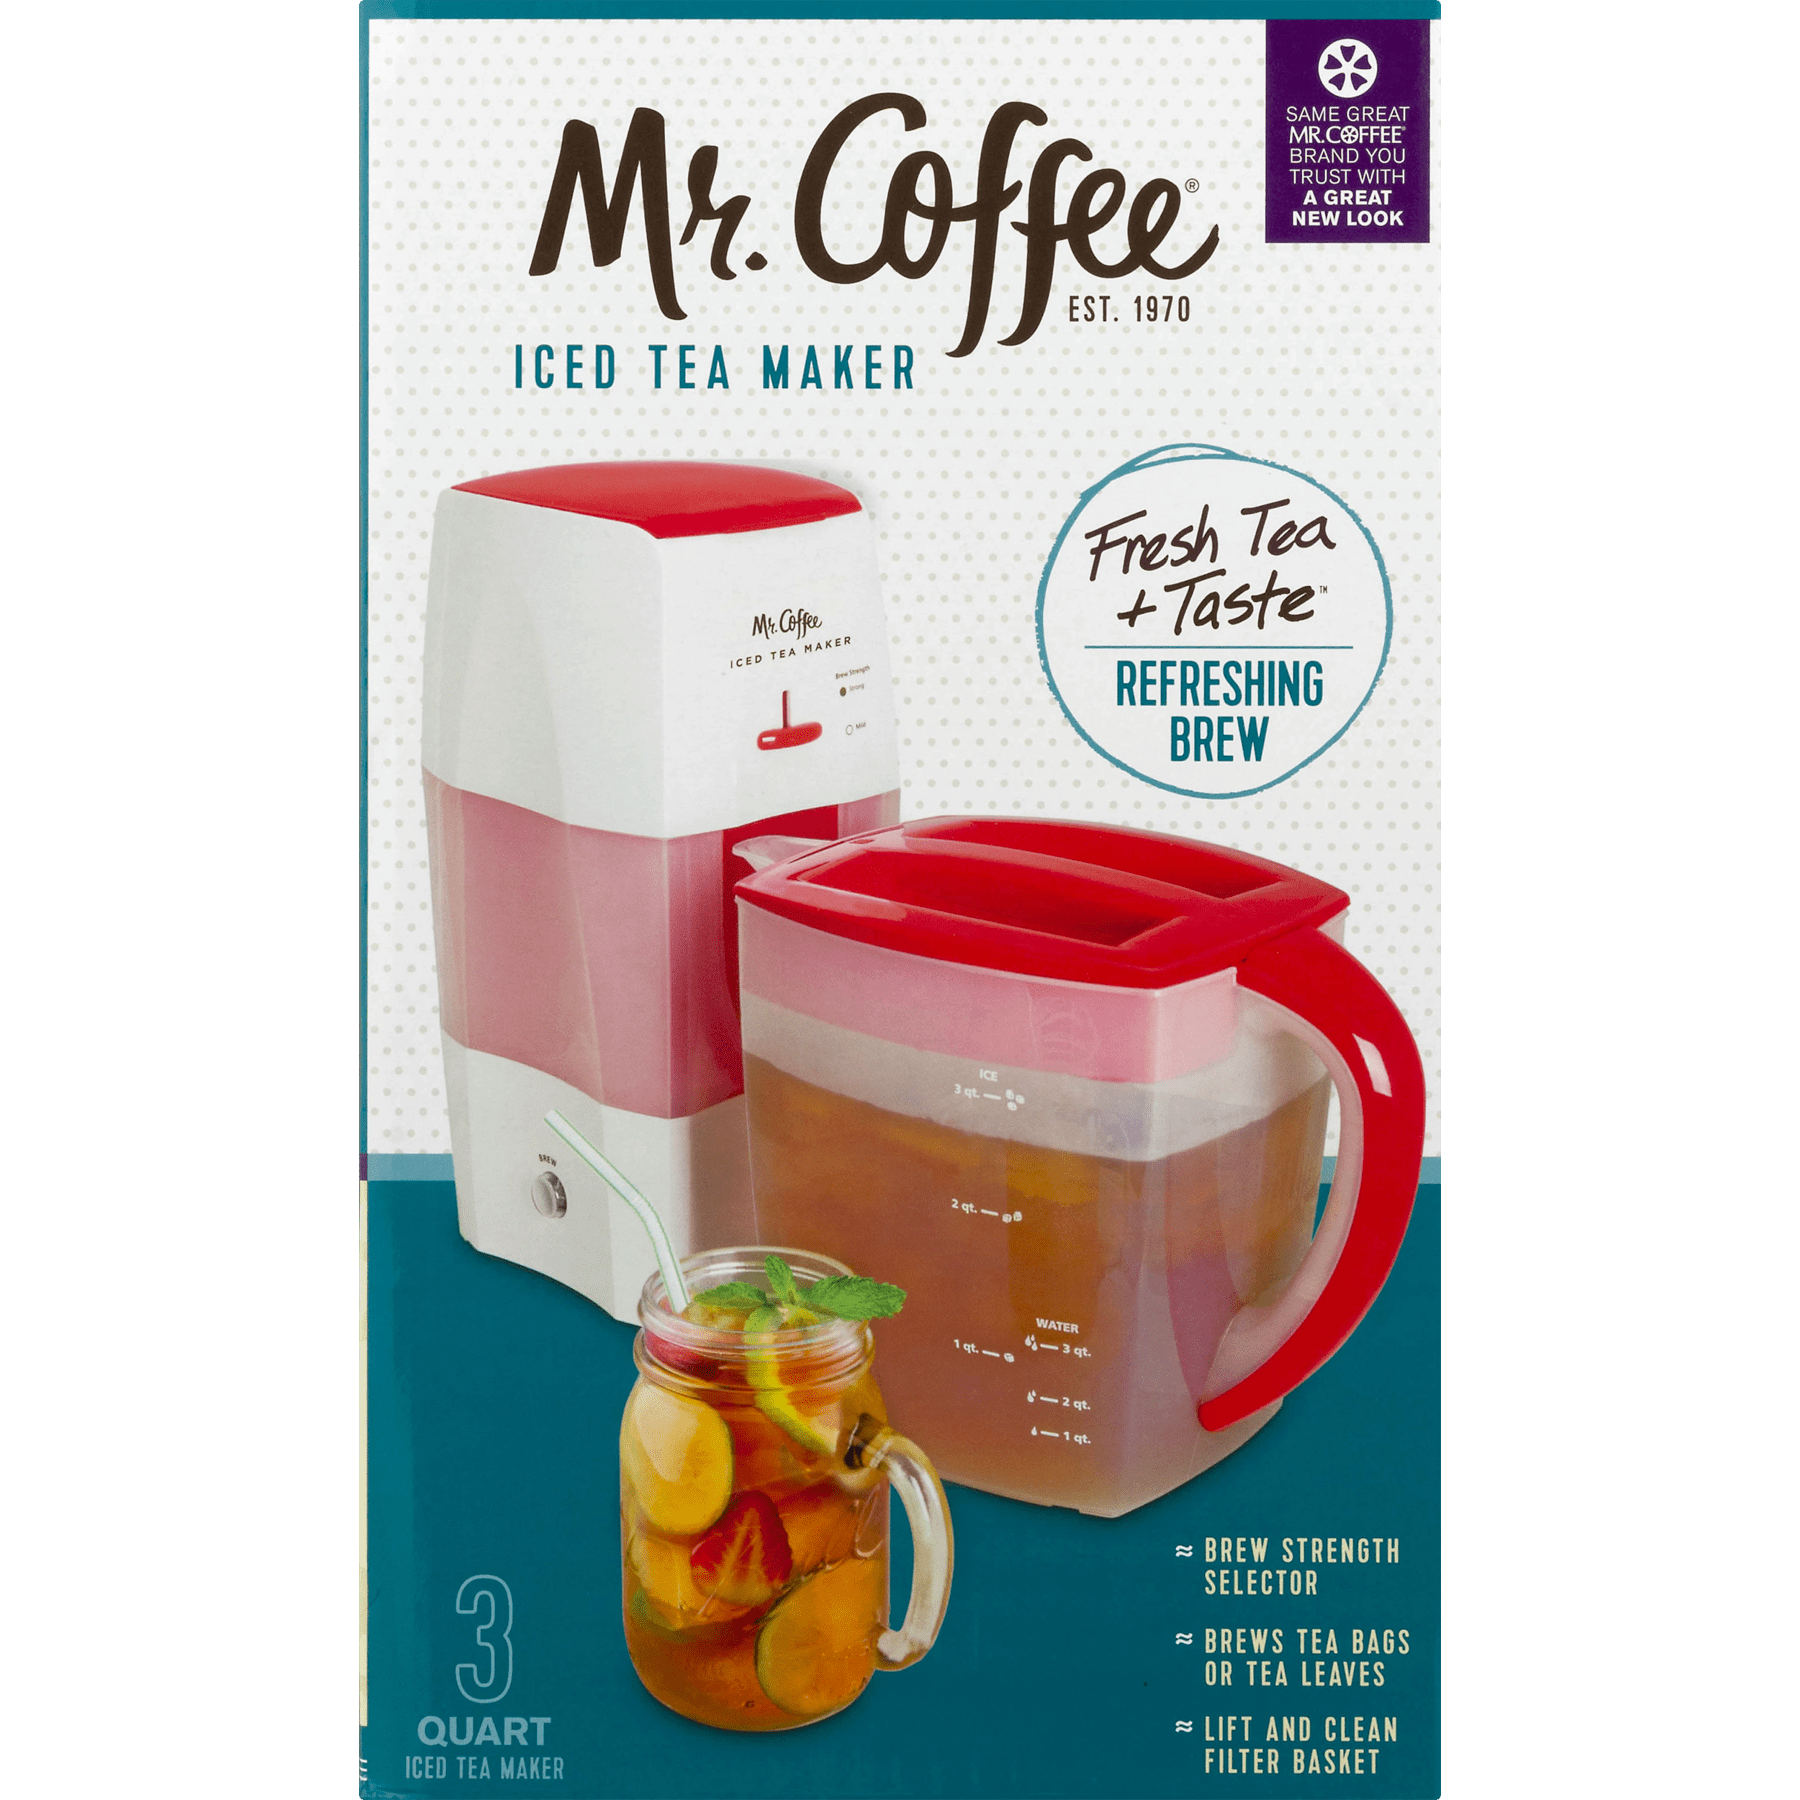 Mr. Coffee 3 Quart Iced Tea Maker